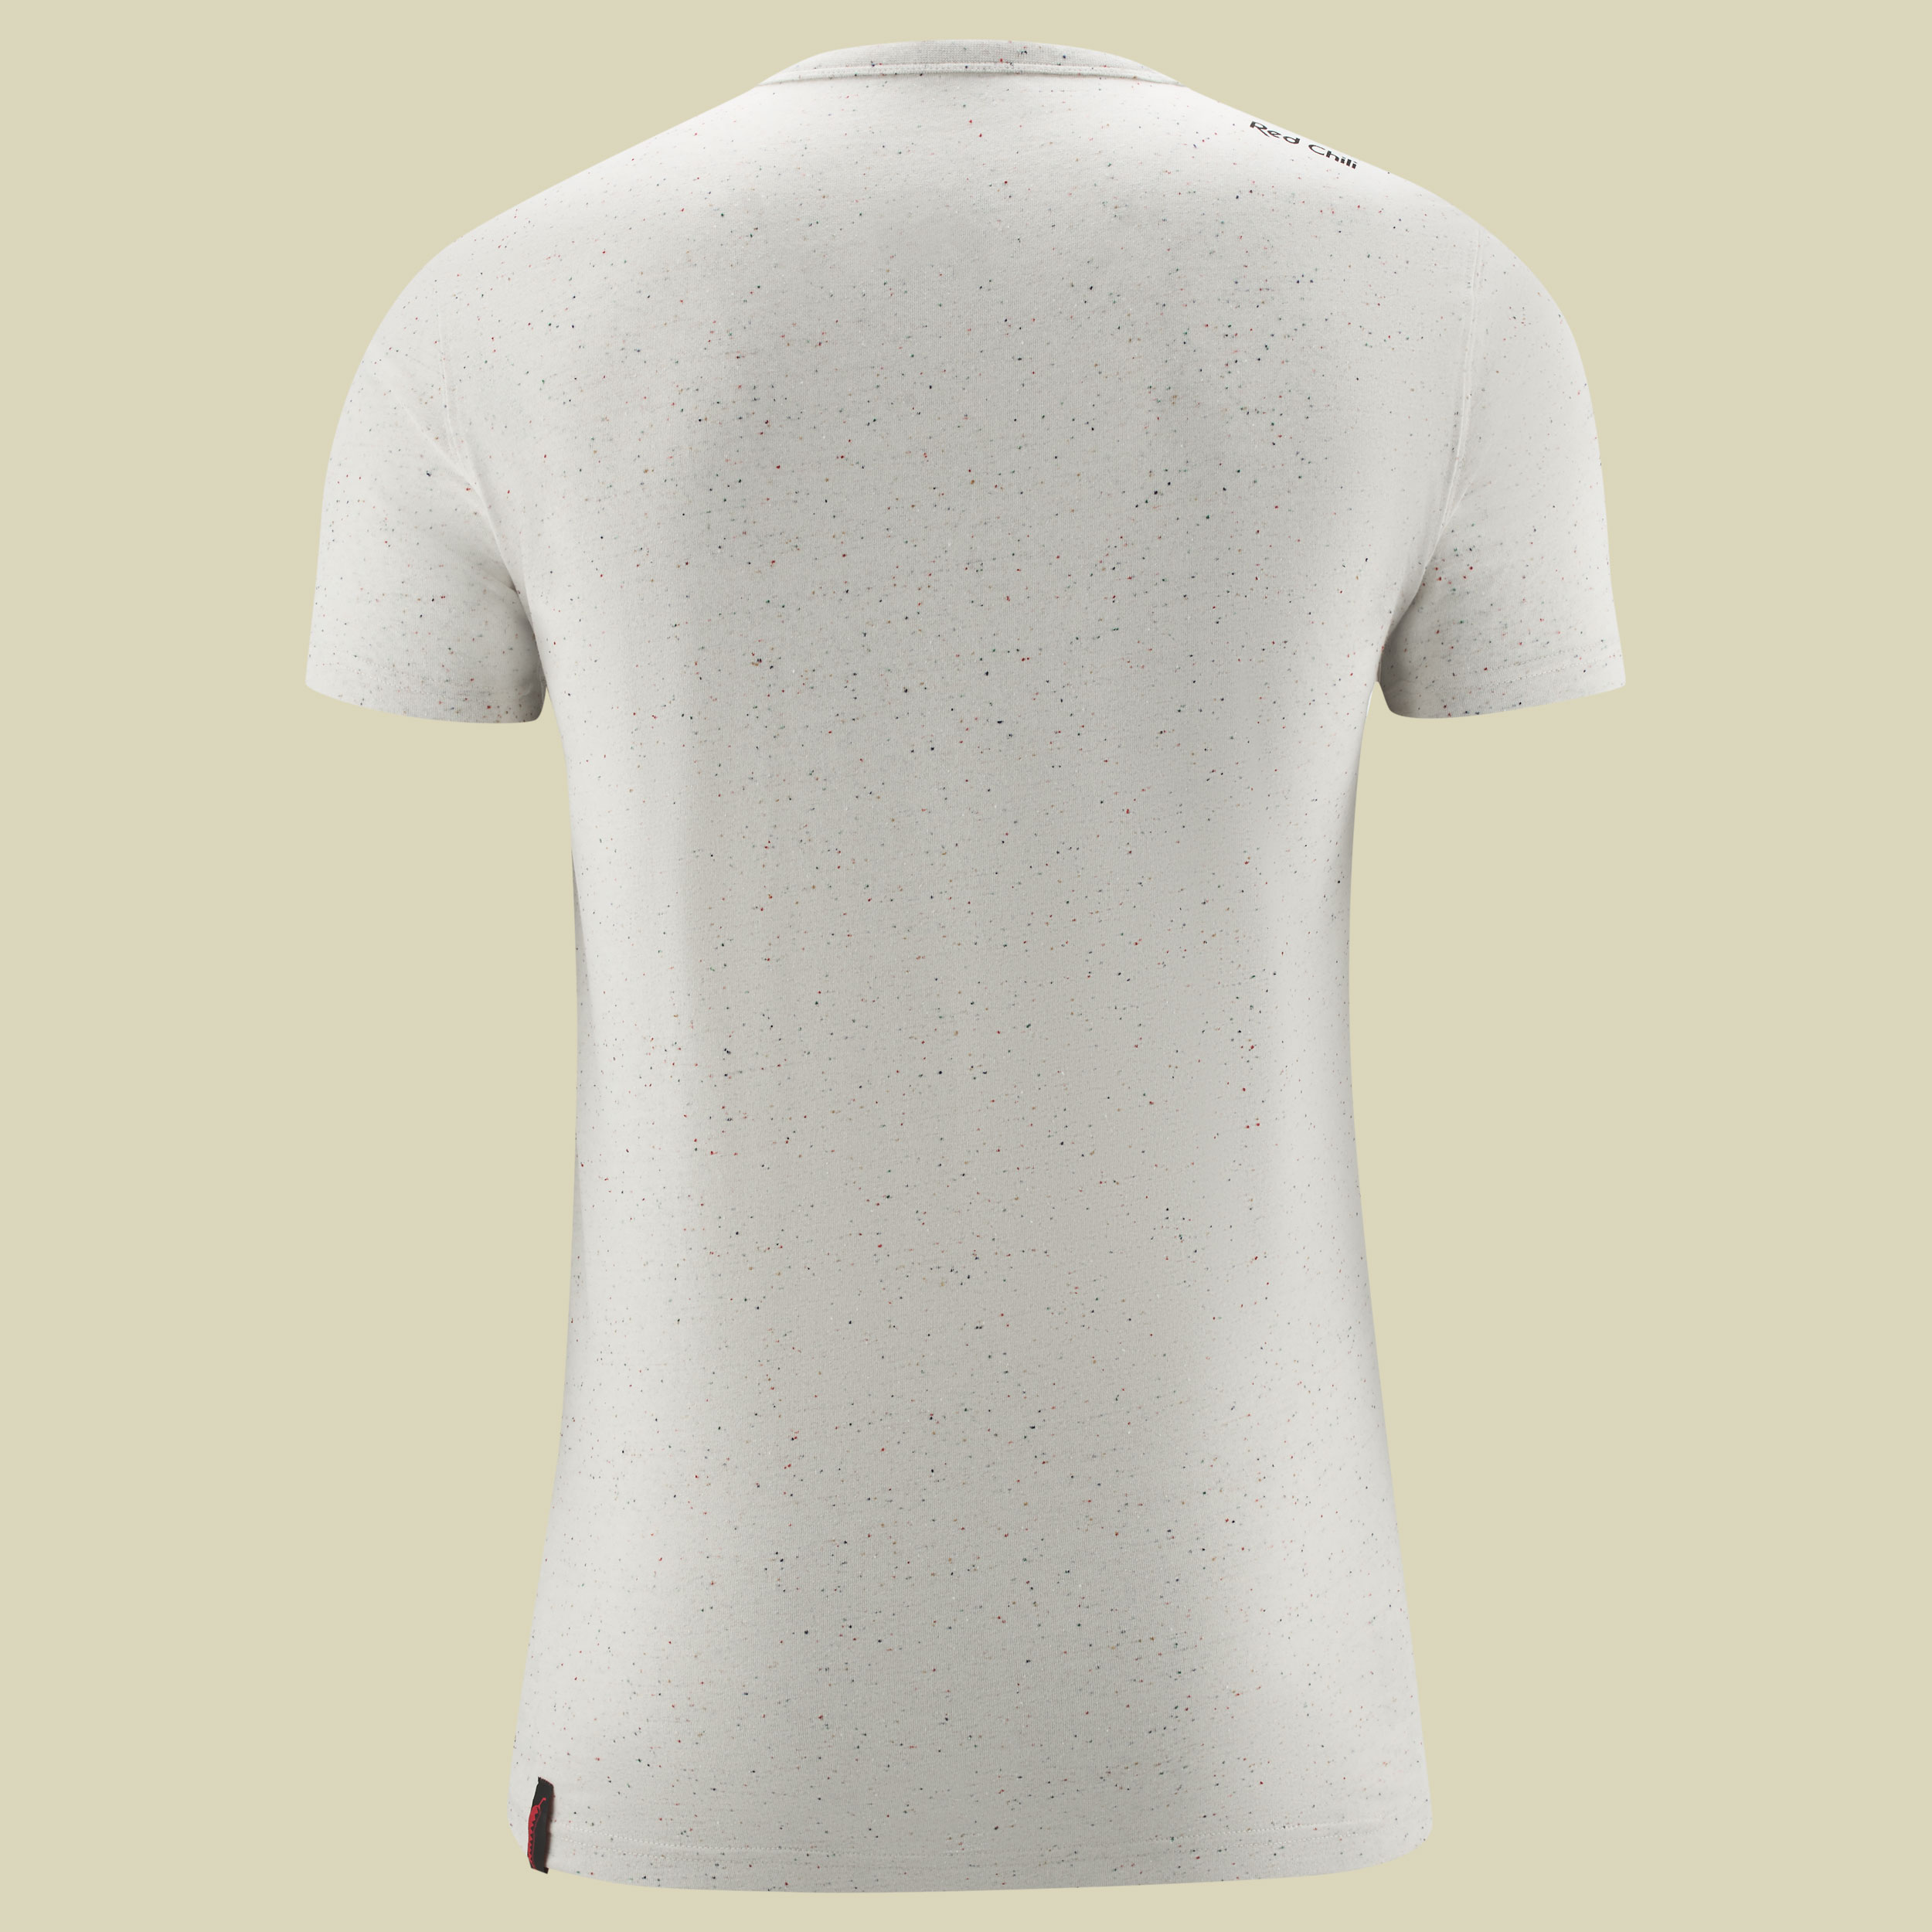 Heso T-Shirt III Men weiß L - white